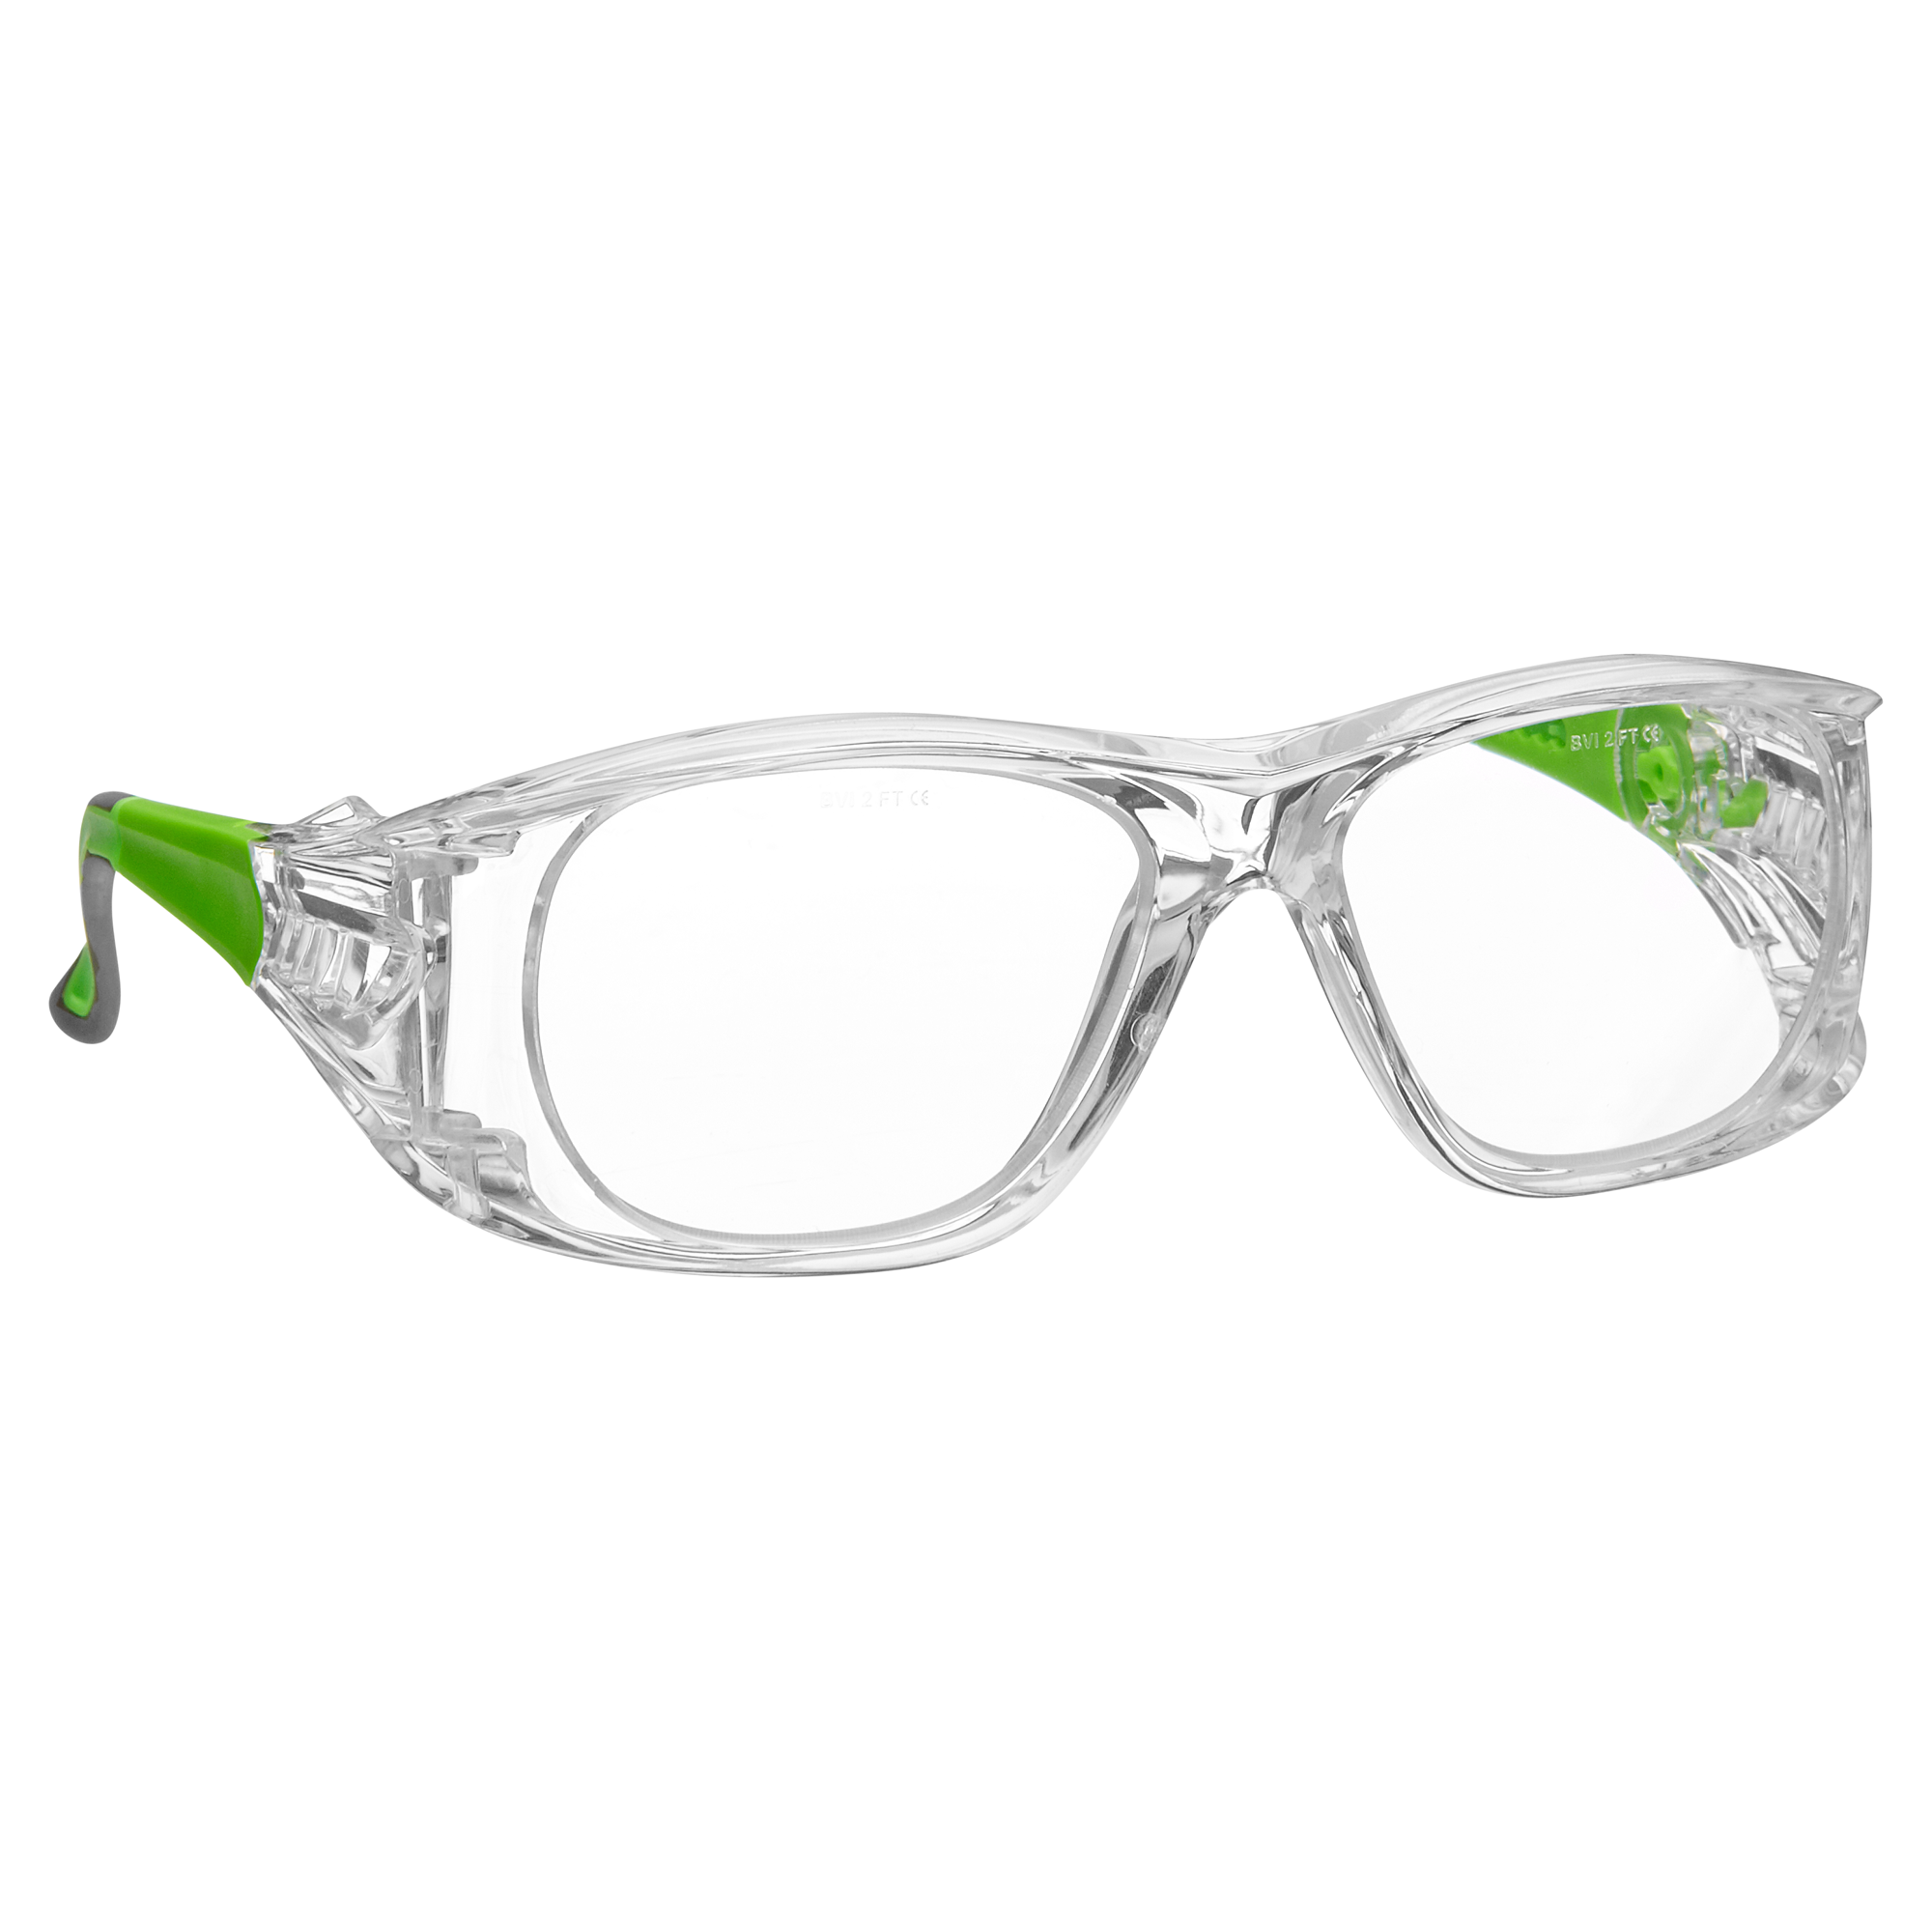 Multidistanz-Schutzbrille 'Safety 250' transparent +2,50 Dioptrien + product picture